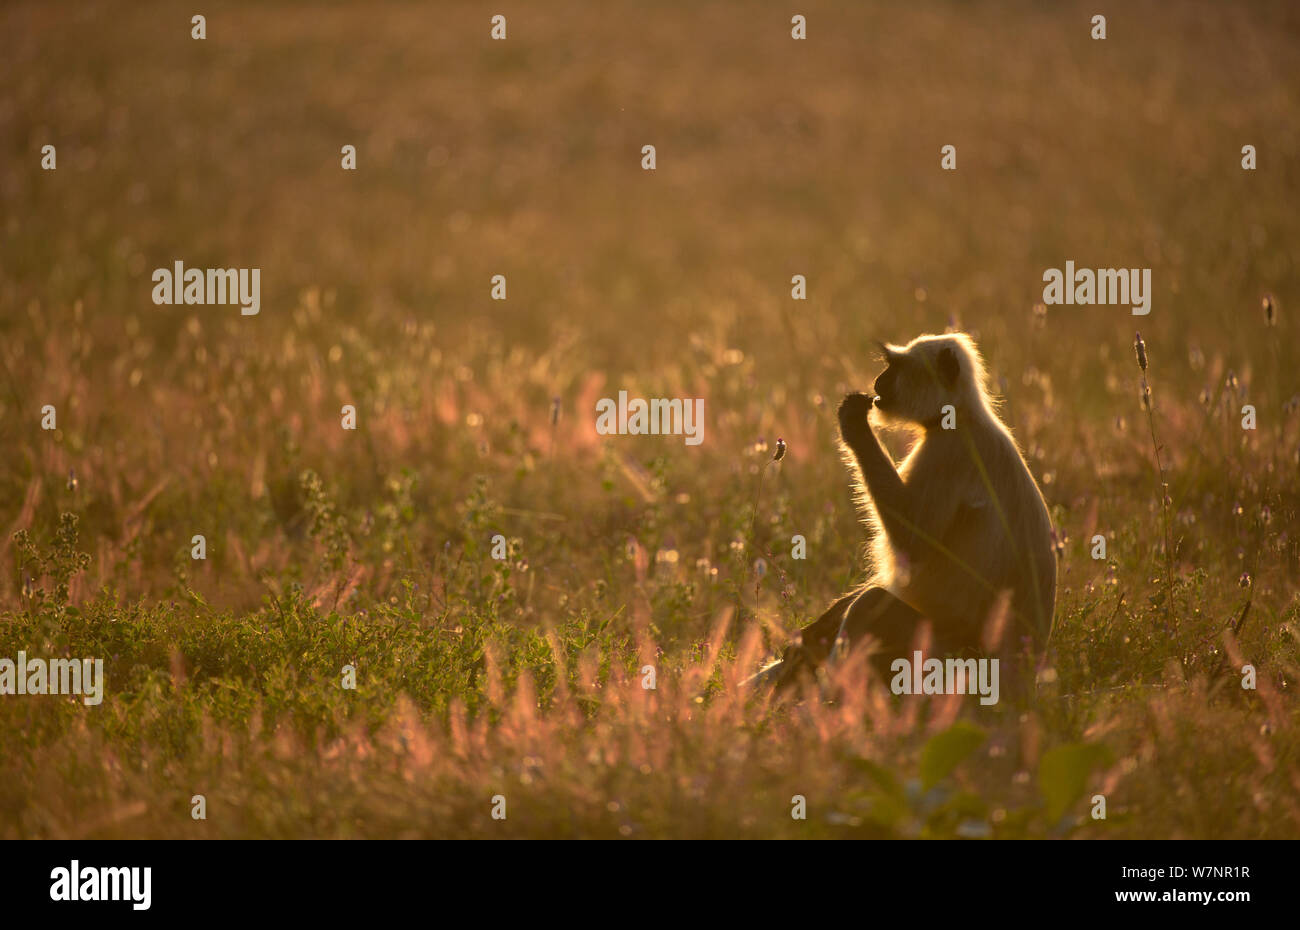 Hanuman / Northern Plains Grey Langur (Presbytis entellus) adult, backlit by evening sunlight, feeding in an open meadow. Bandhavgarh National Park, India. Non-ex. Stock Photo